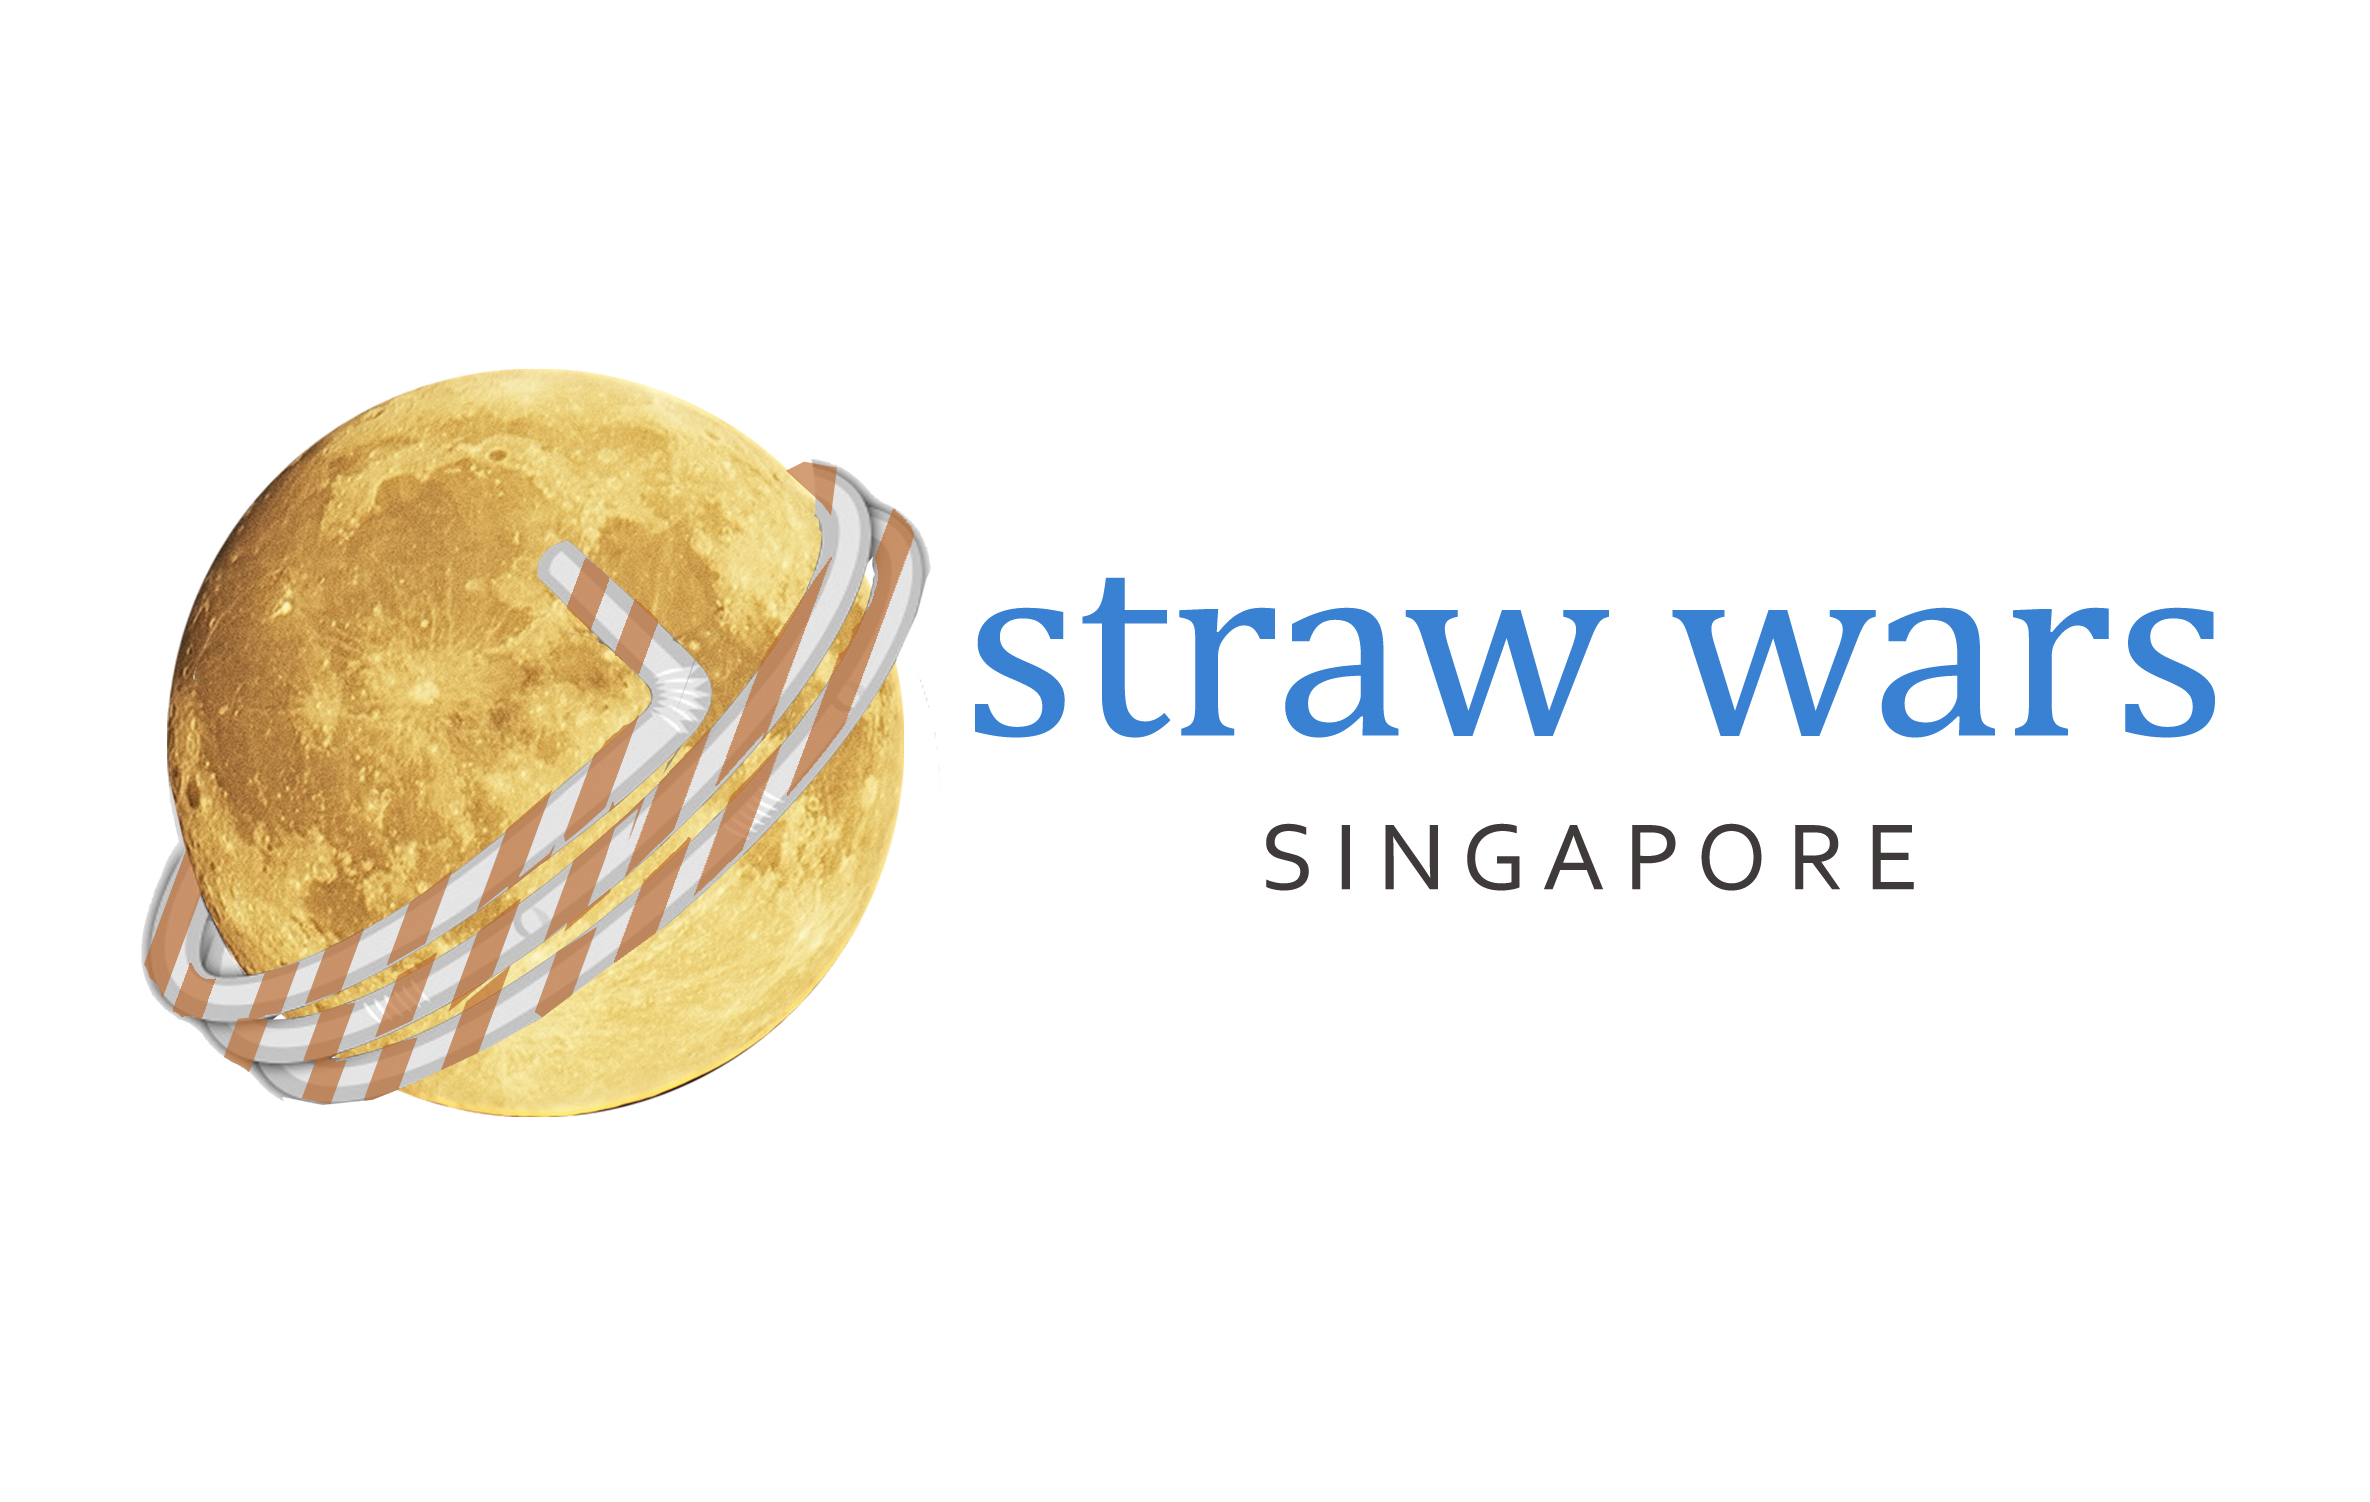 Straw Wars Singapore